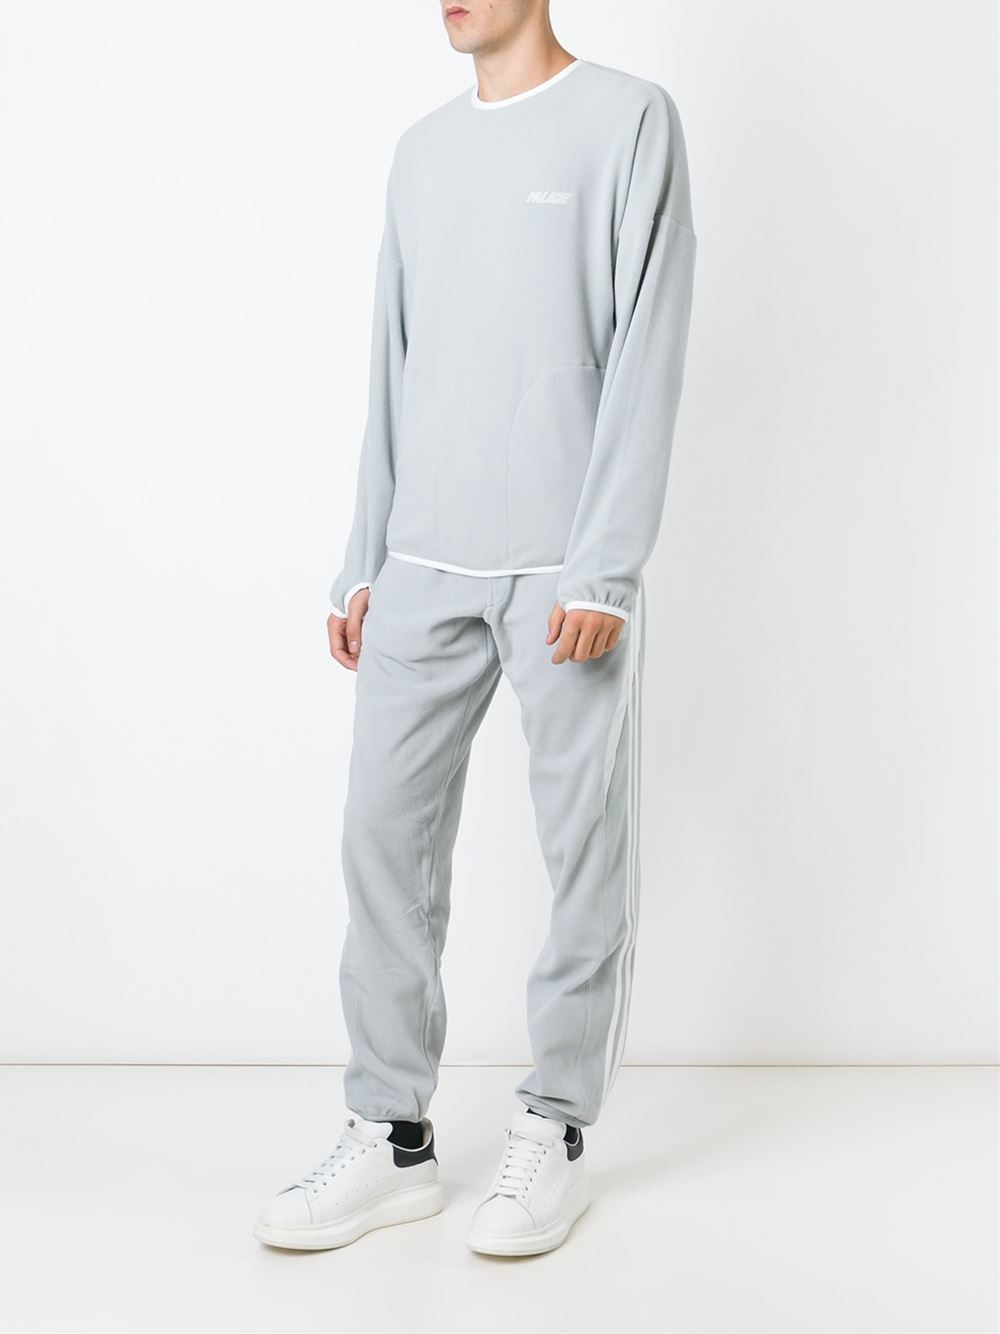 adidas Originals ' X Palace' Fleece Joggers in Grey (Gray) for Men - Lyst